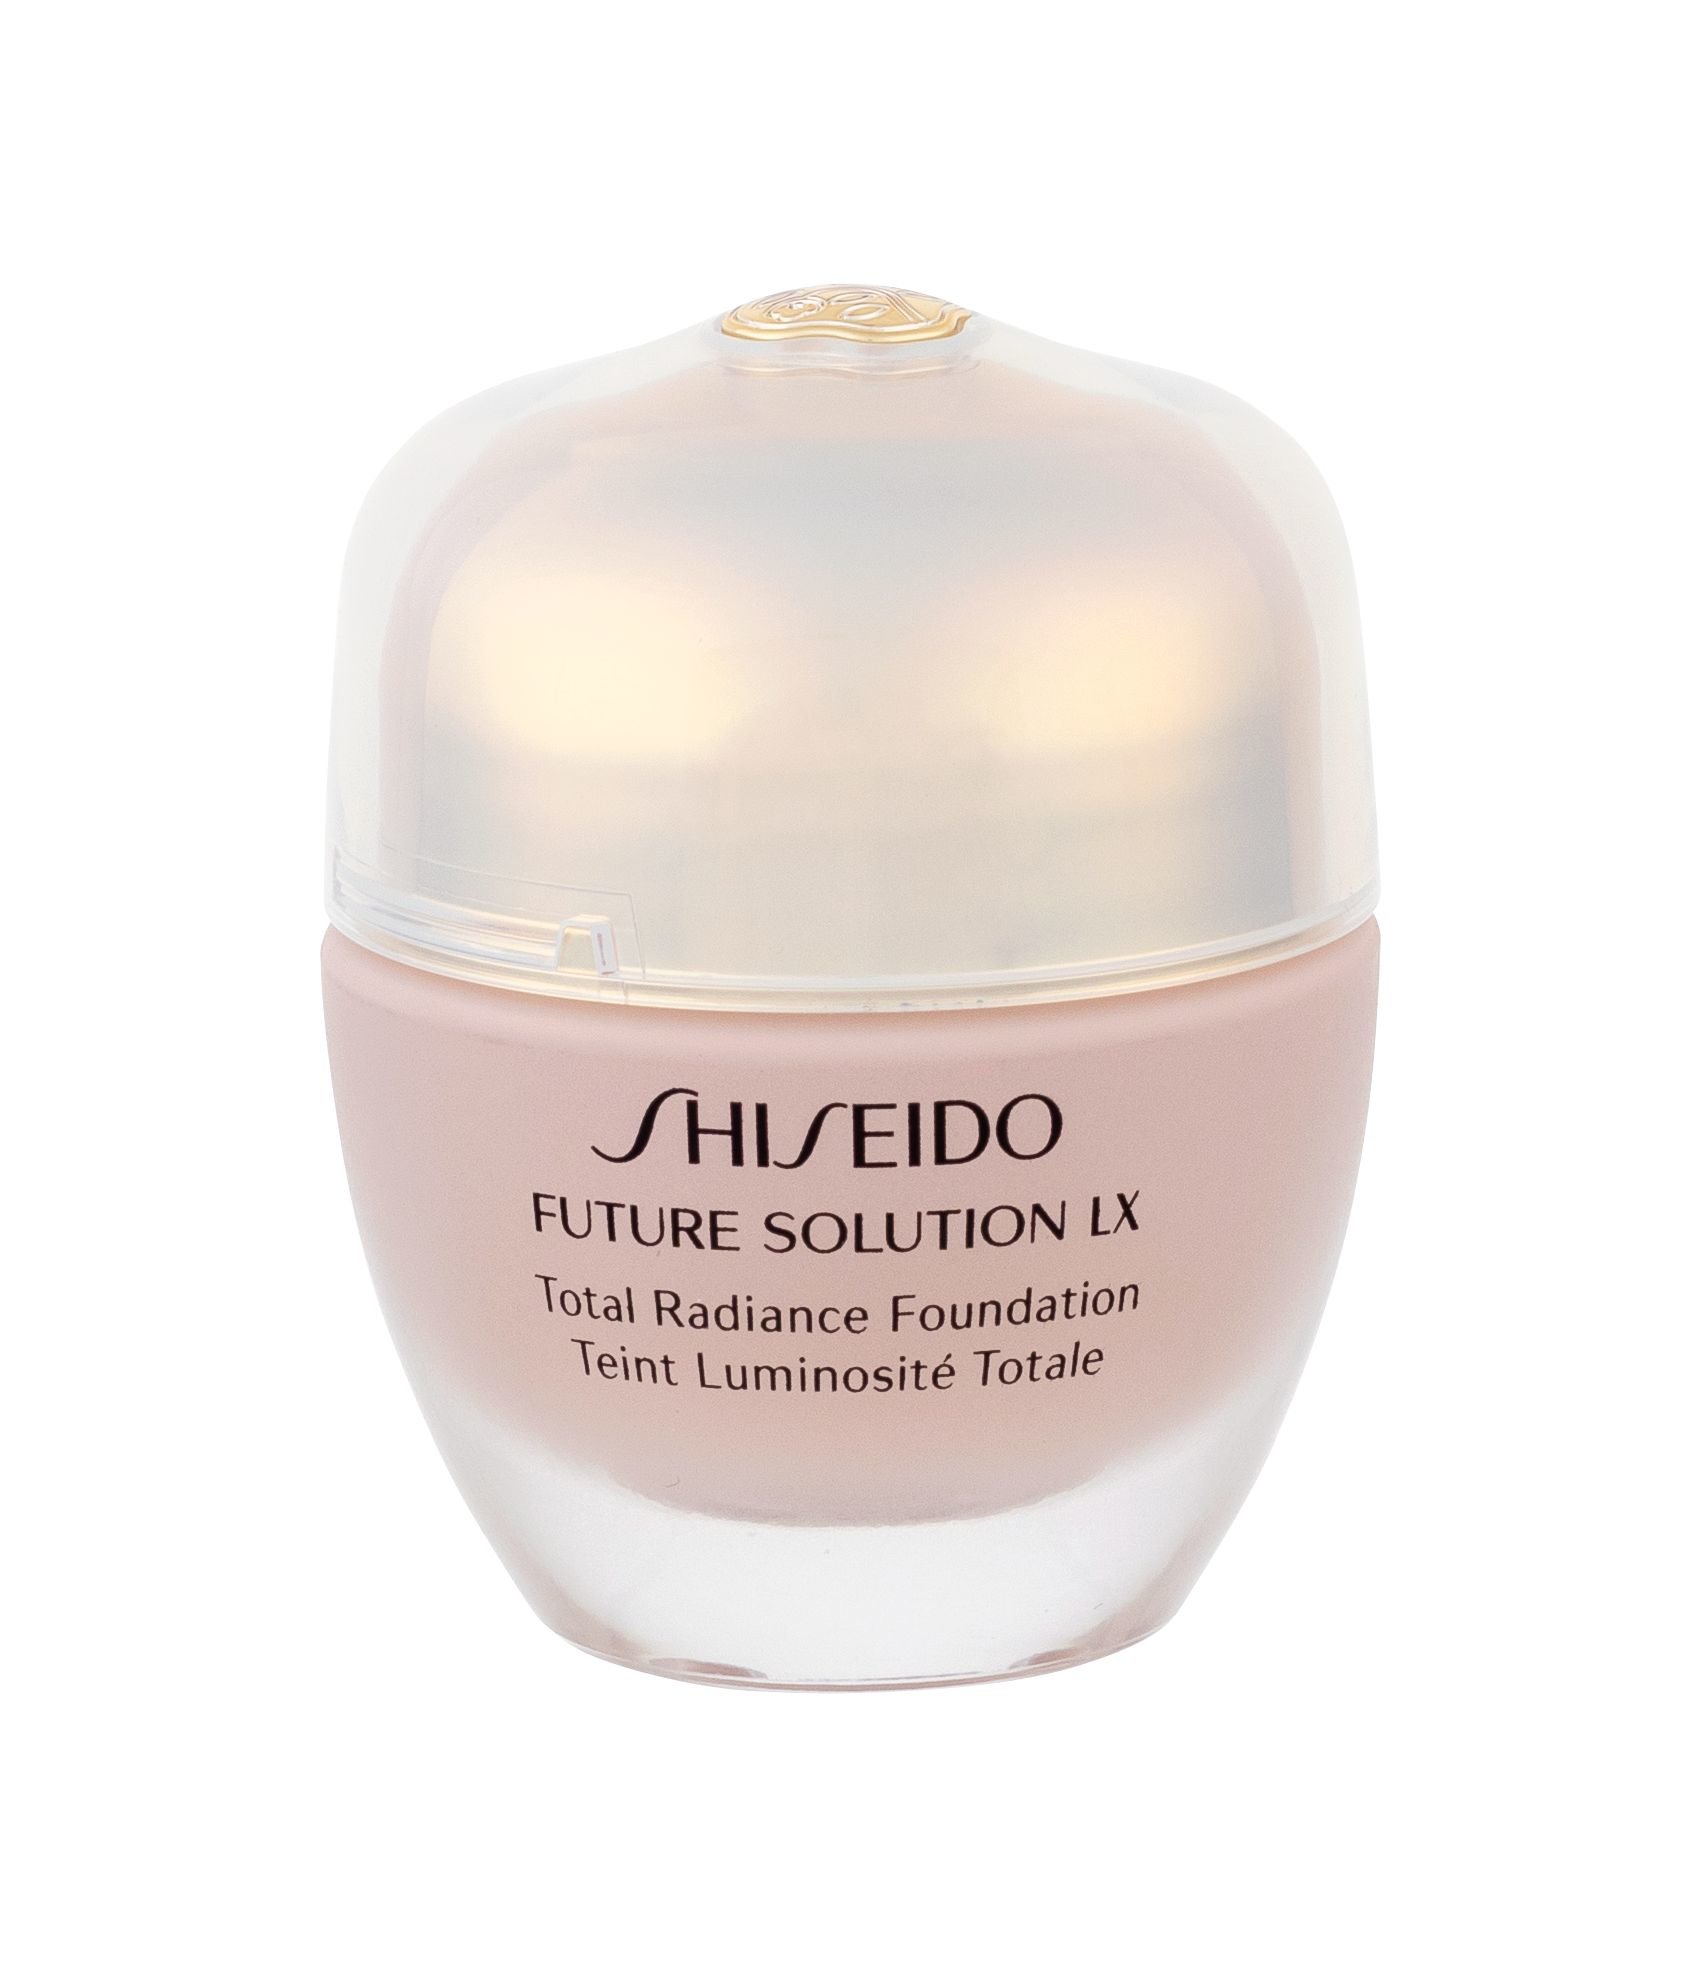 Shiseido FUTURE Solution LX Total Radiance Foundation SPF15